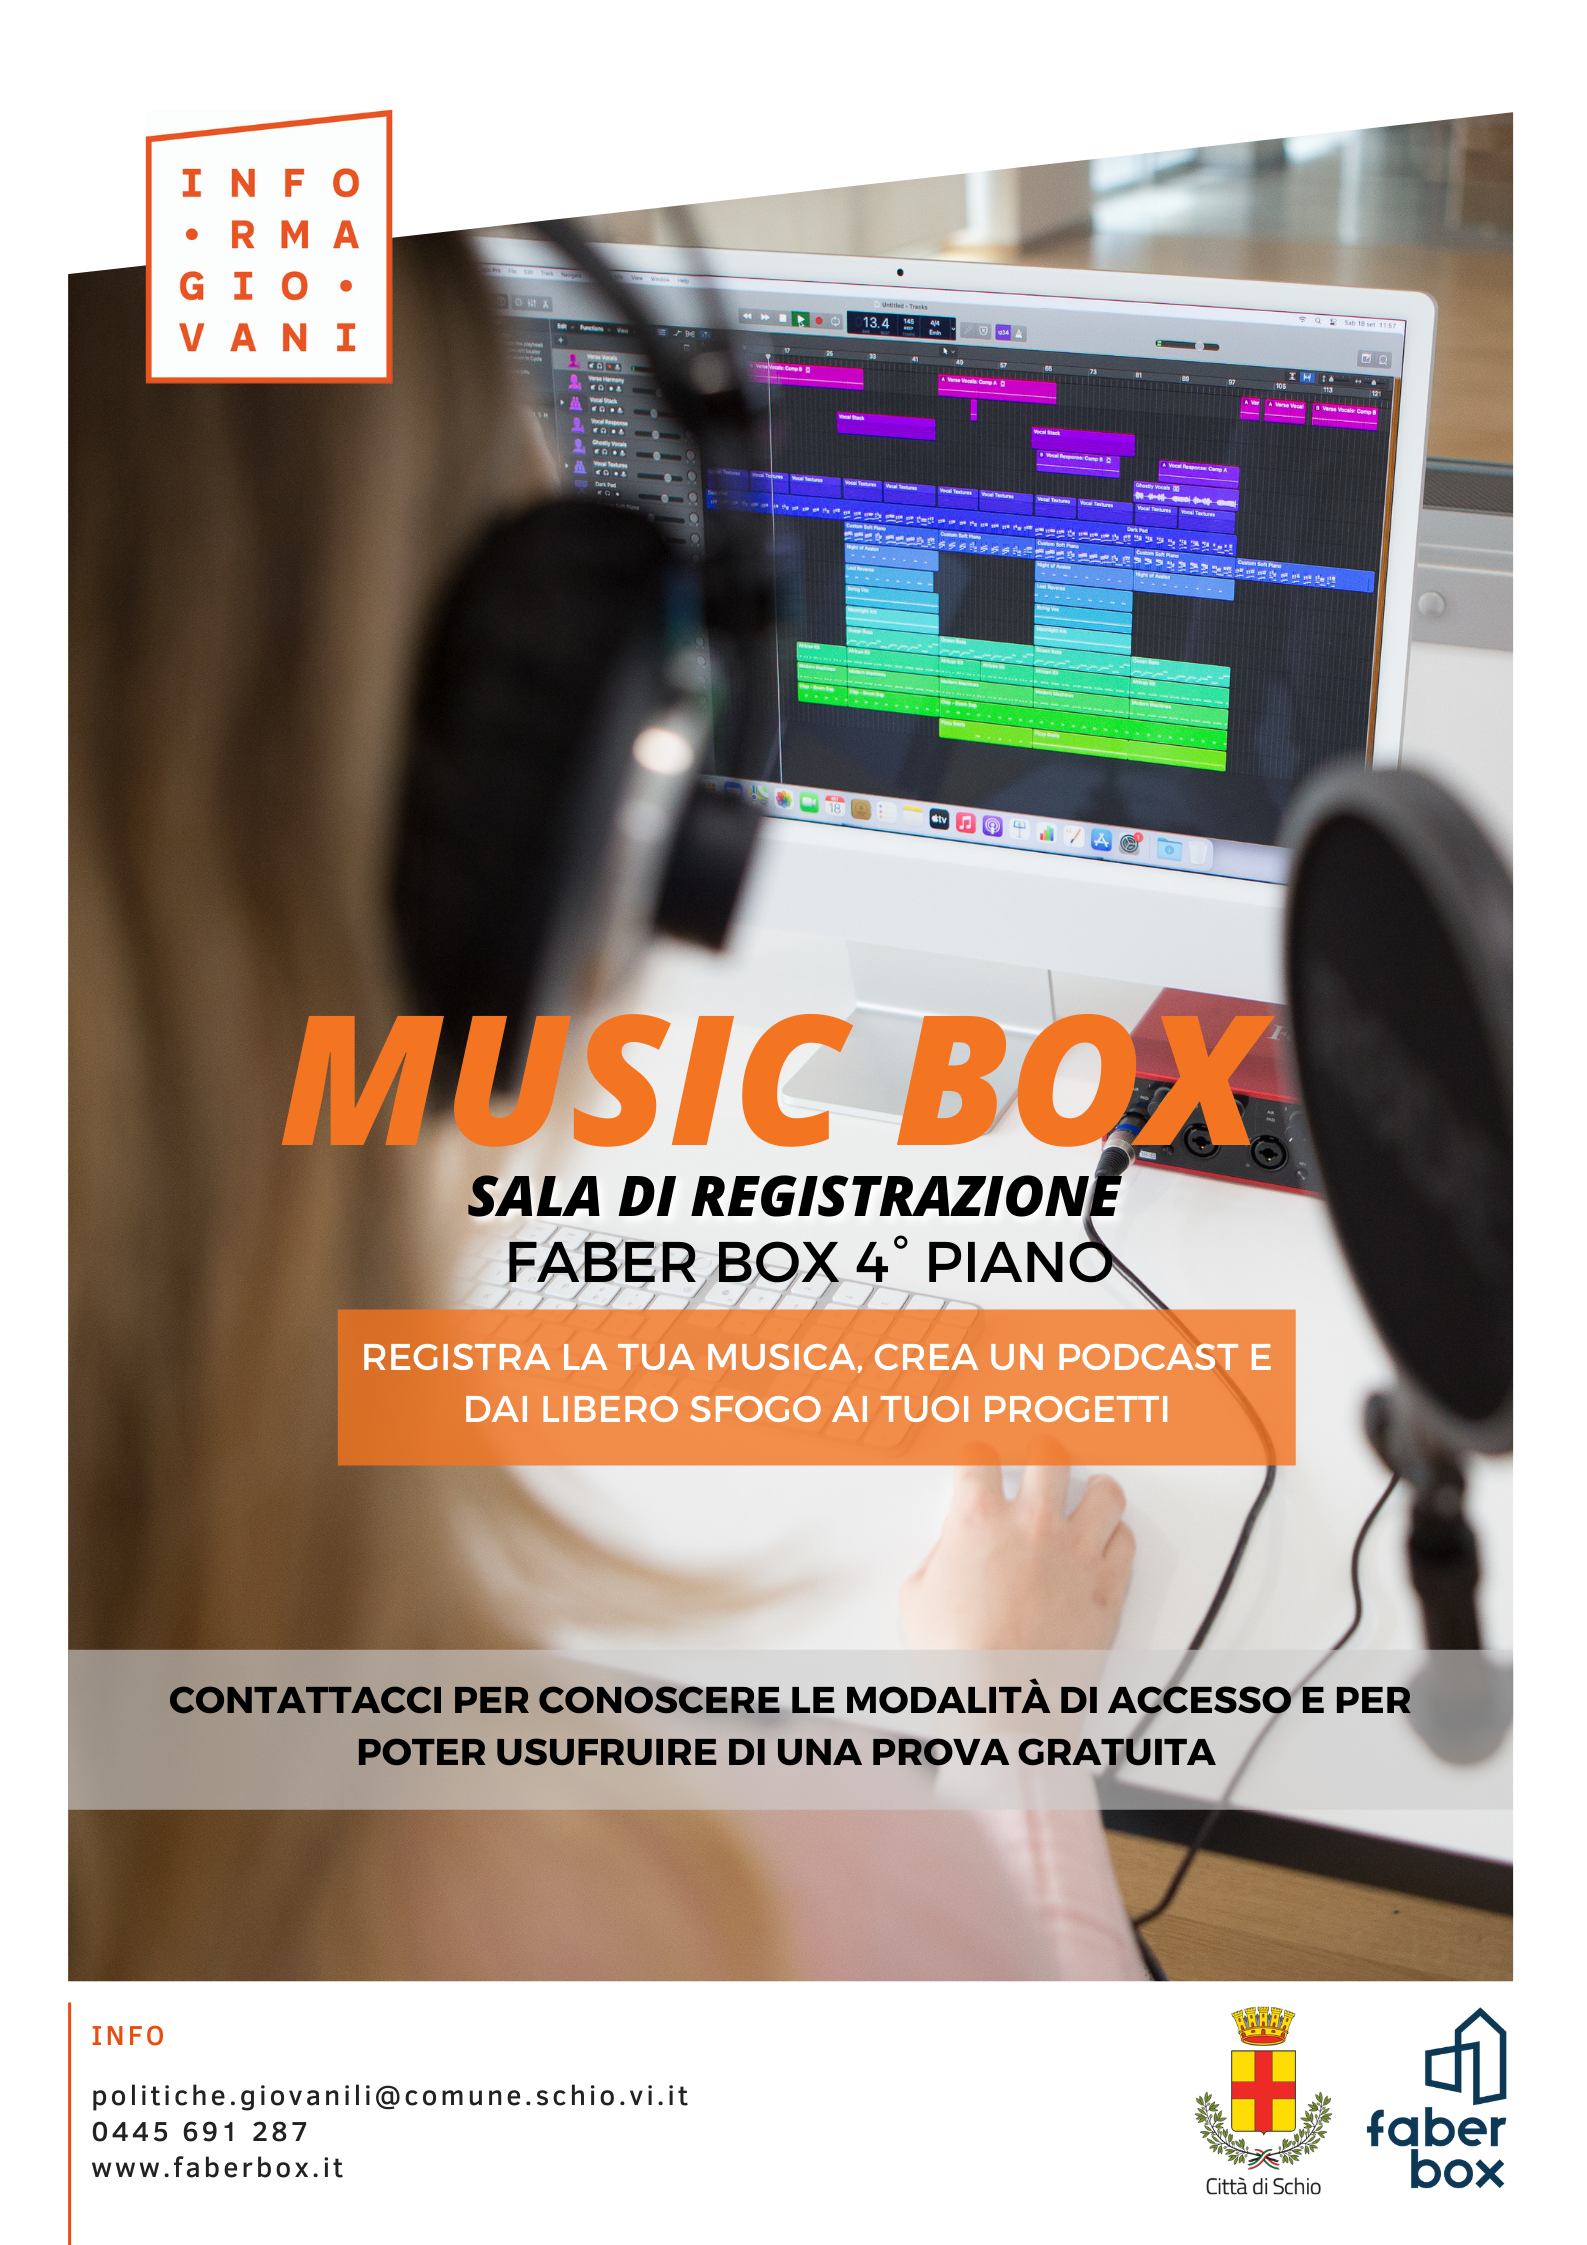 Music Box – sala di registrazione